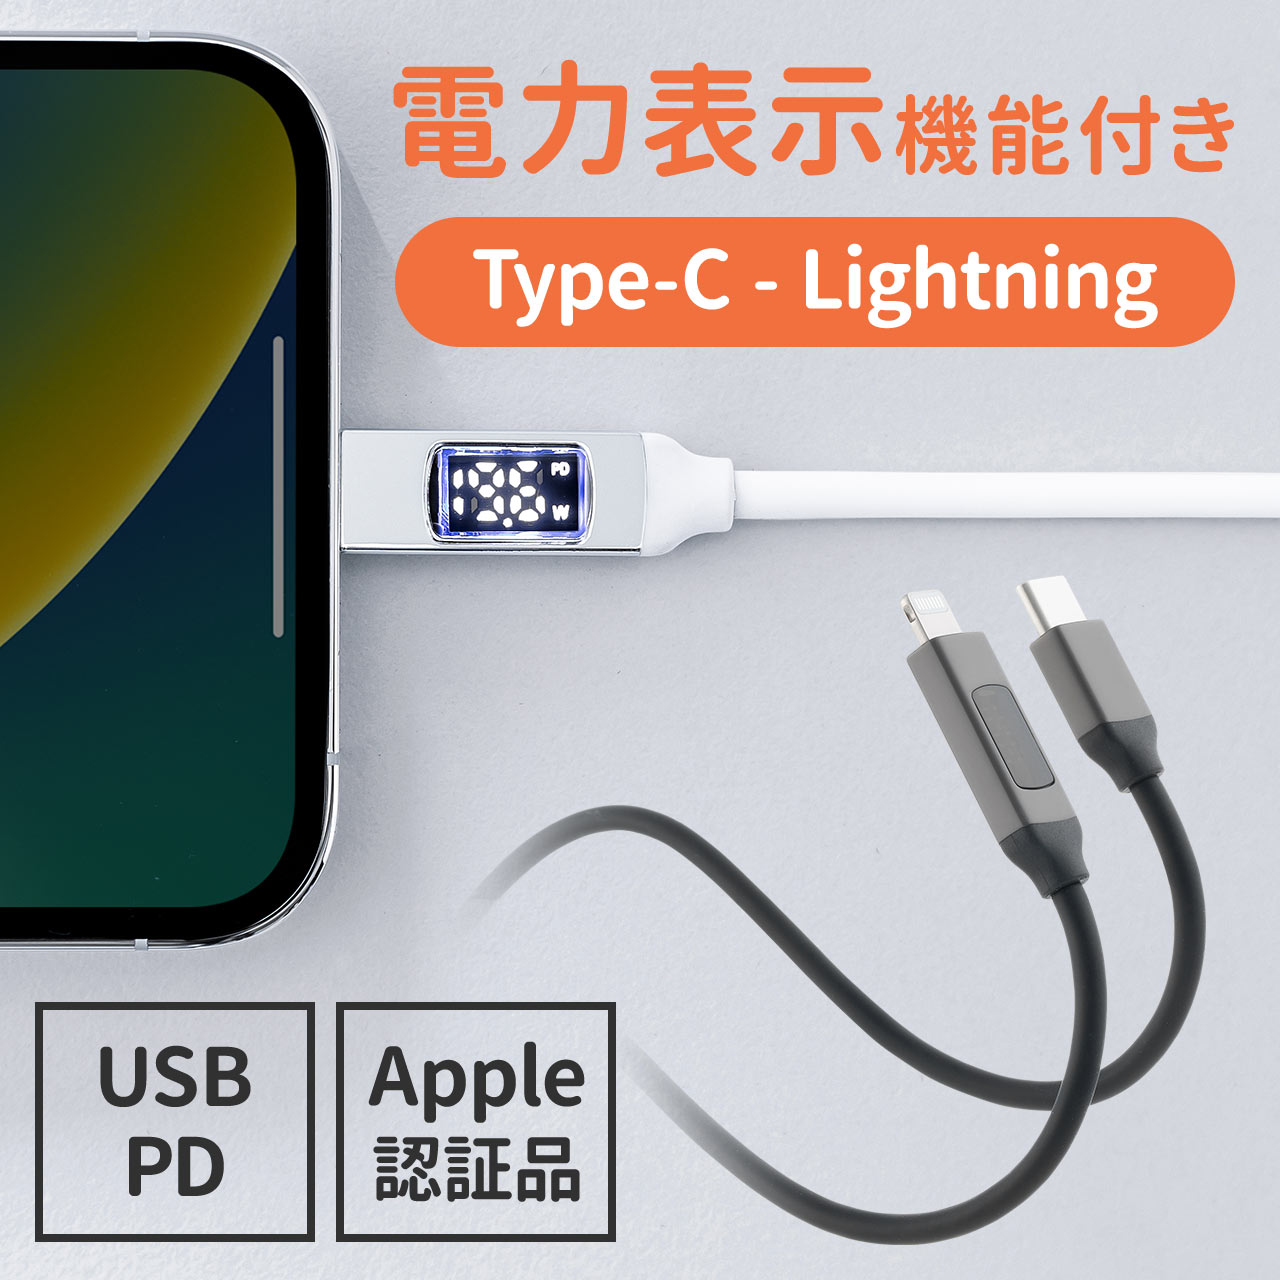 PD電力表示機能付き USB Type-C Lightning ケーブル Apple MFi認証品